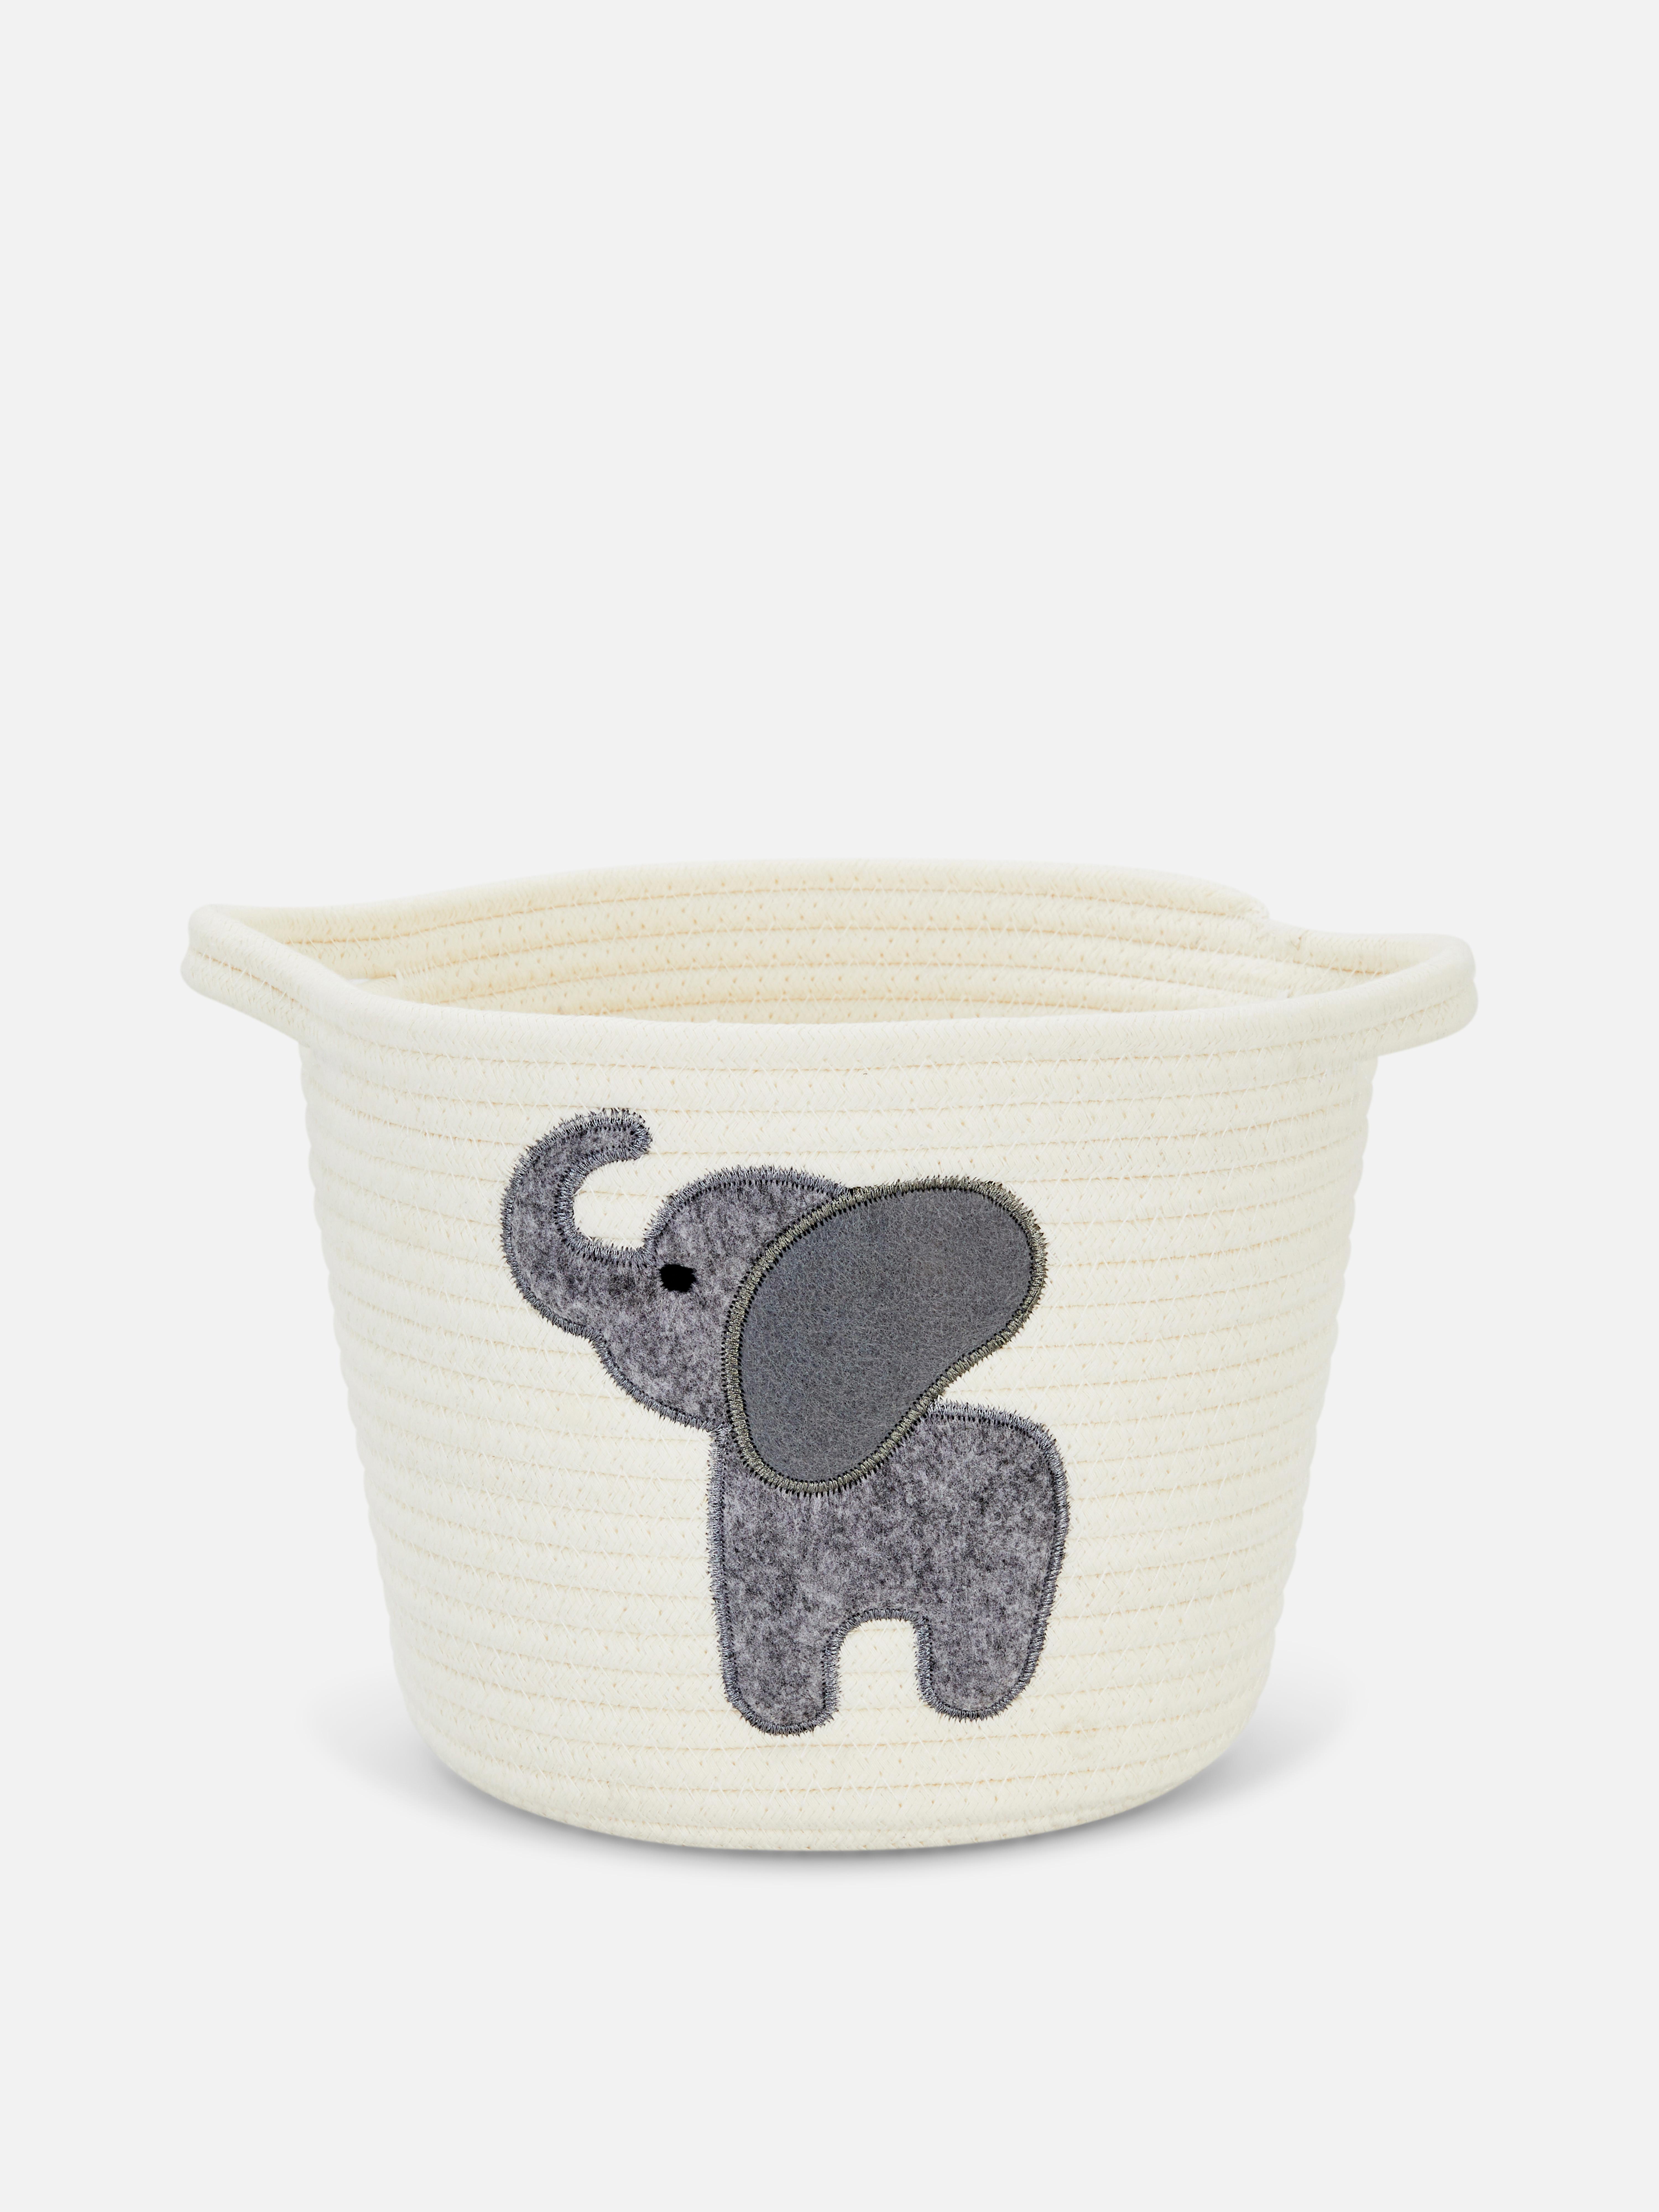 Elephant Woven Basket Grey